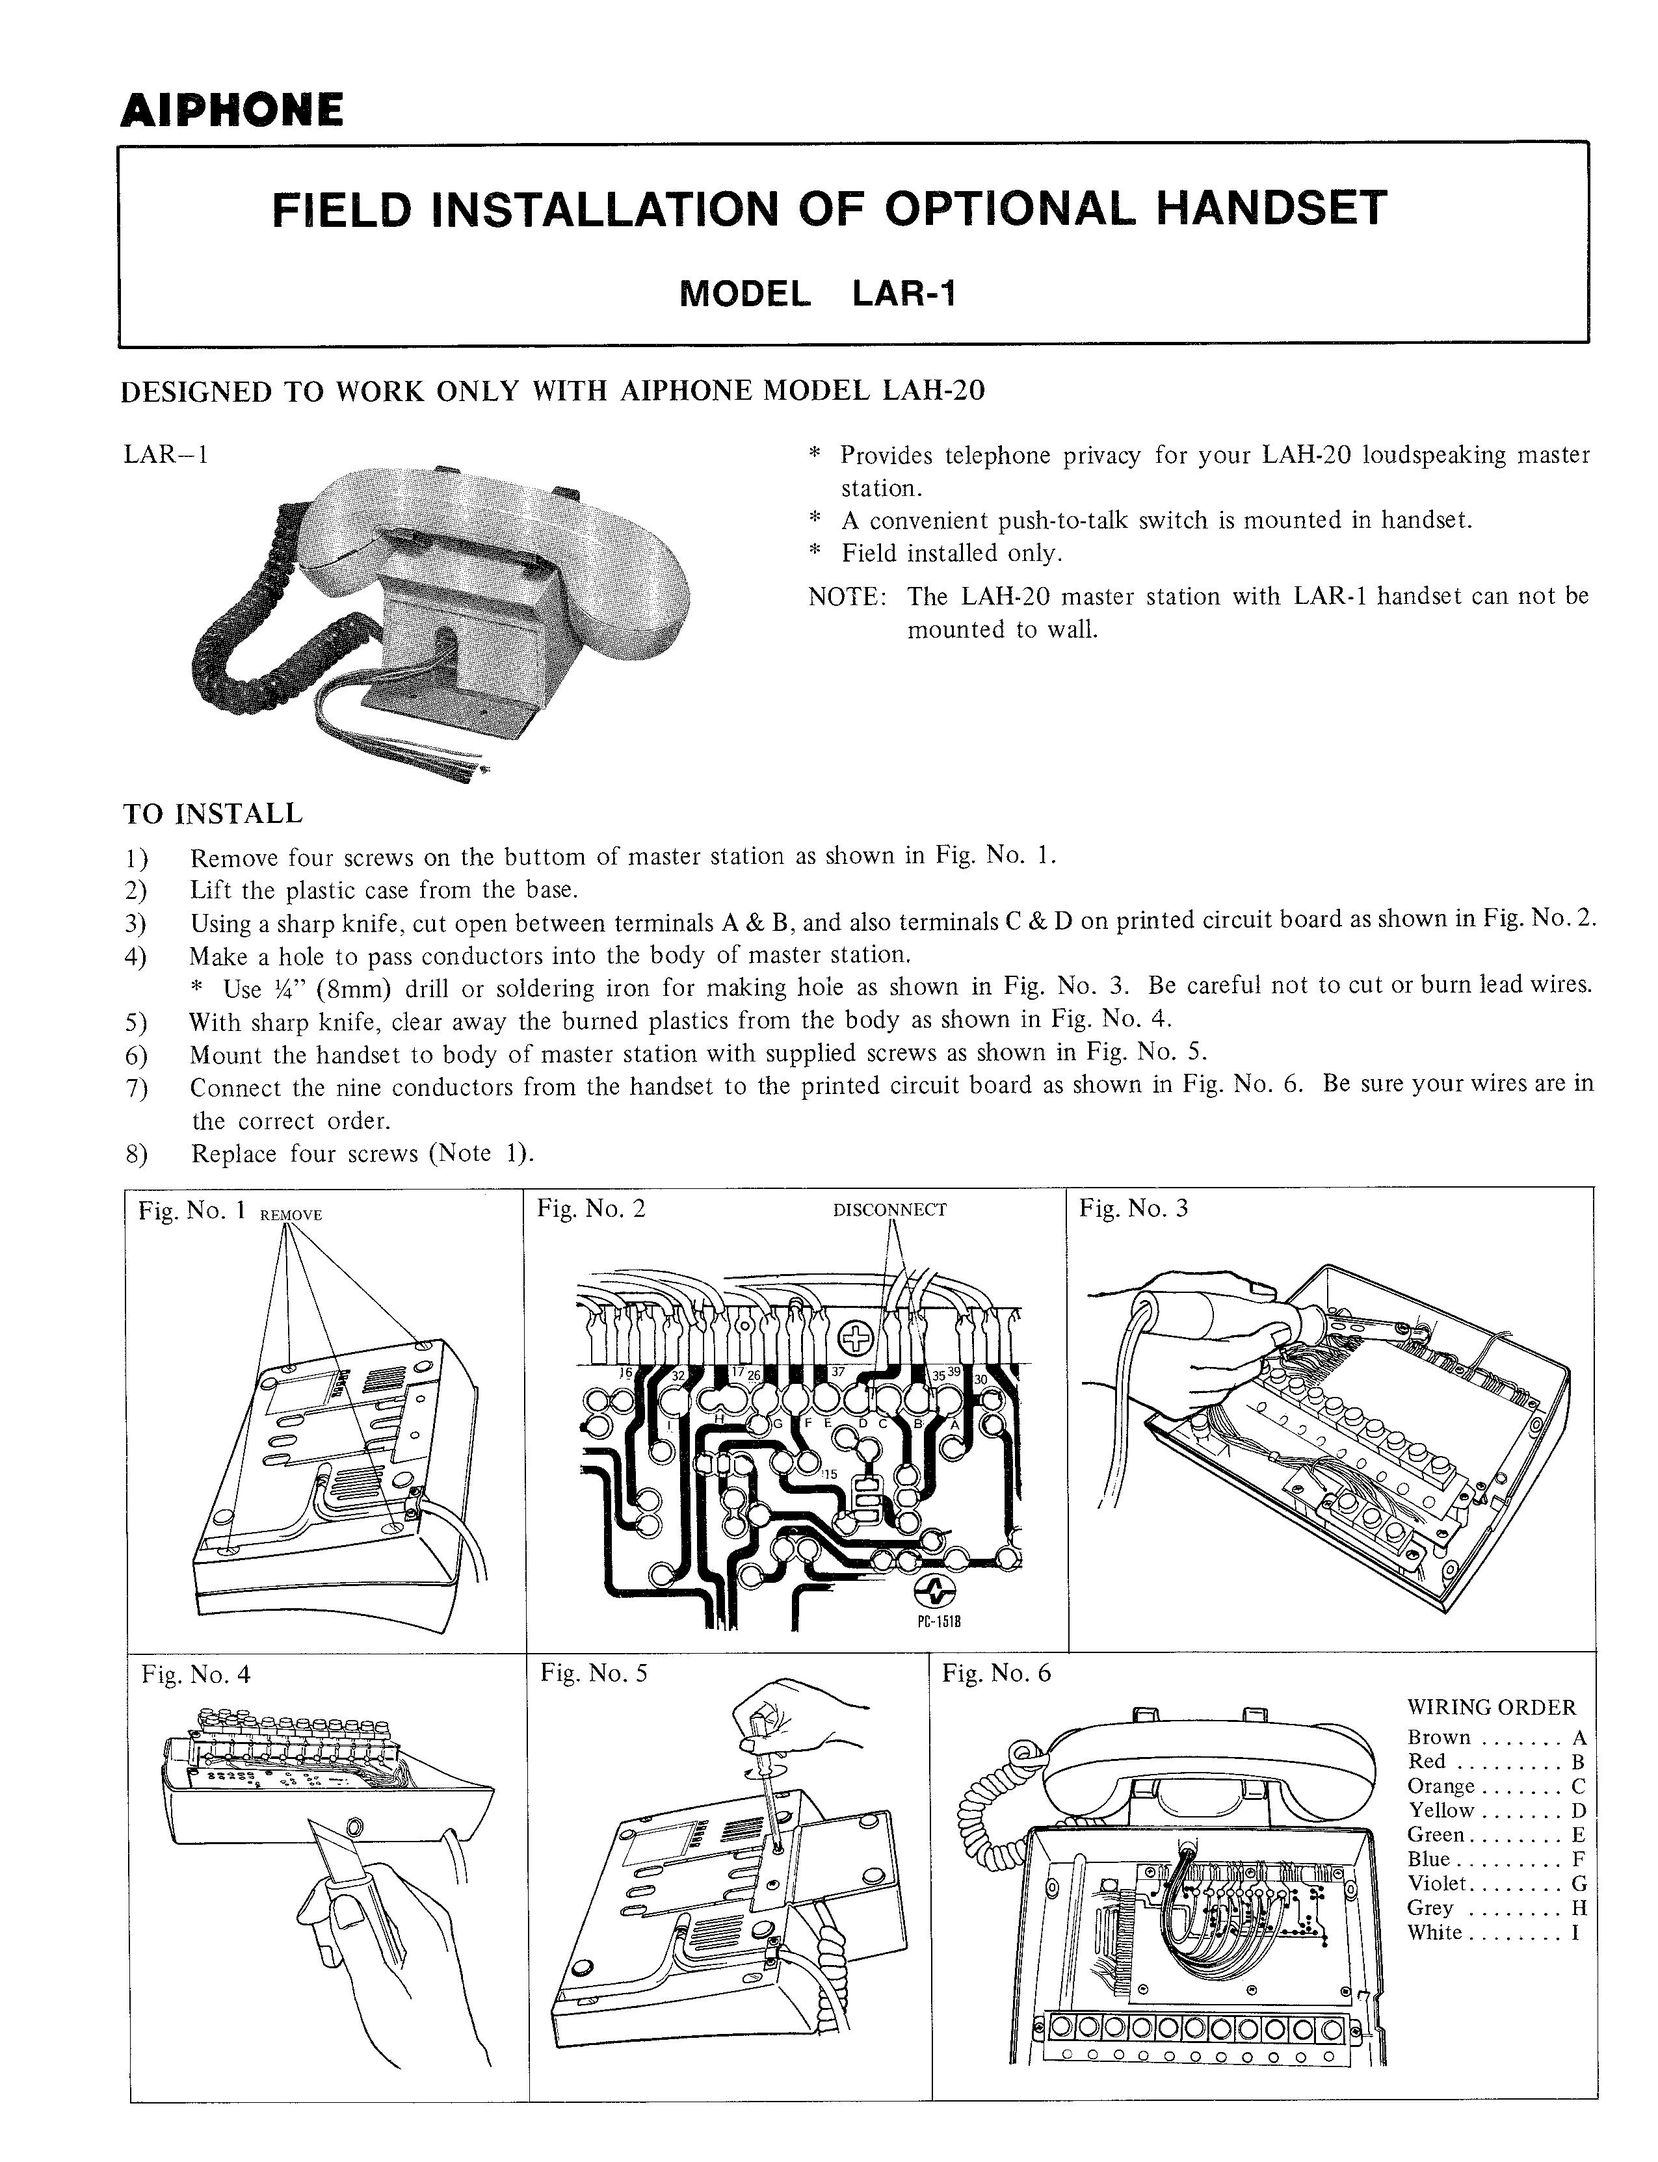 Aiphone LAR-1 Telephone User Manual